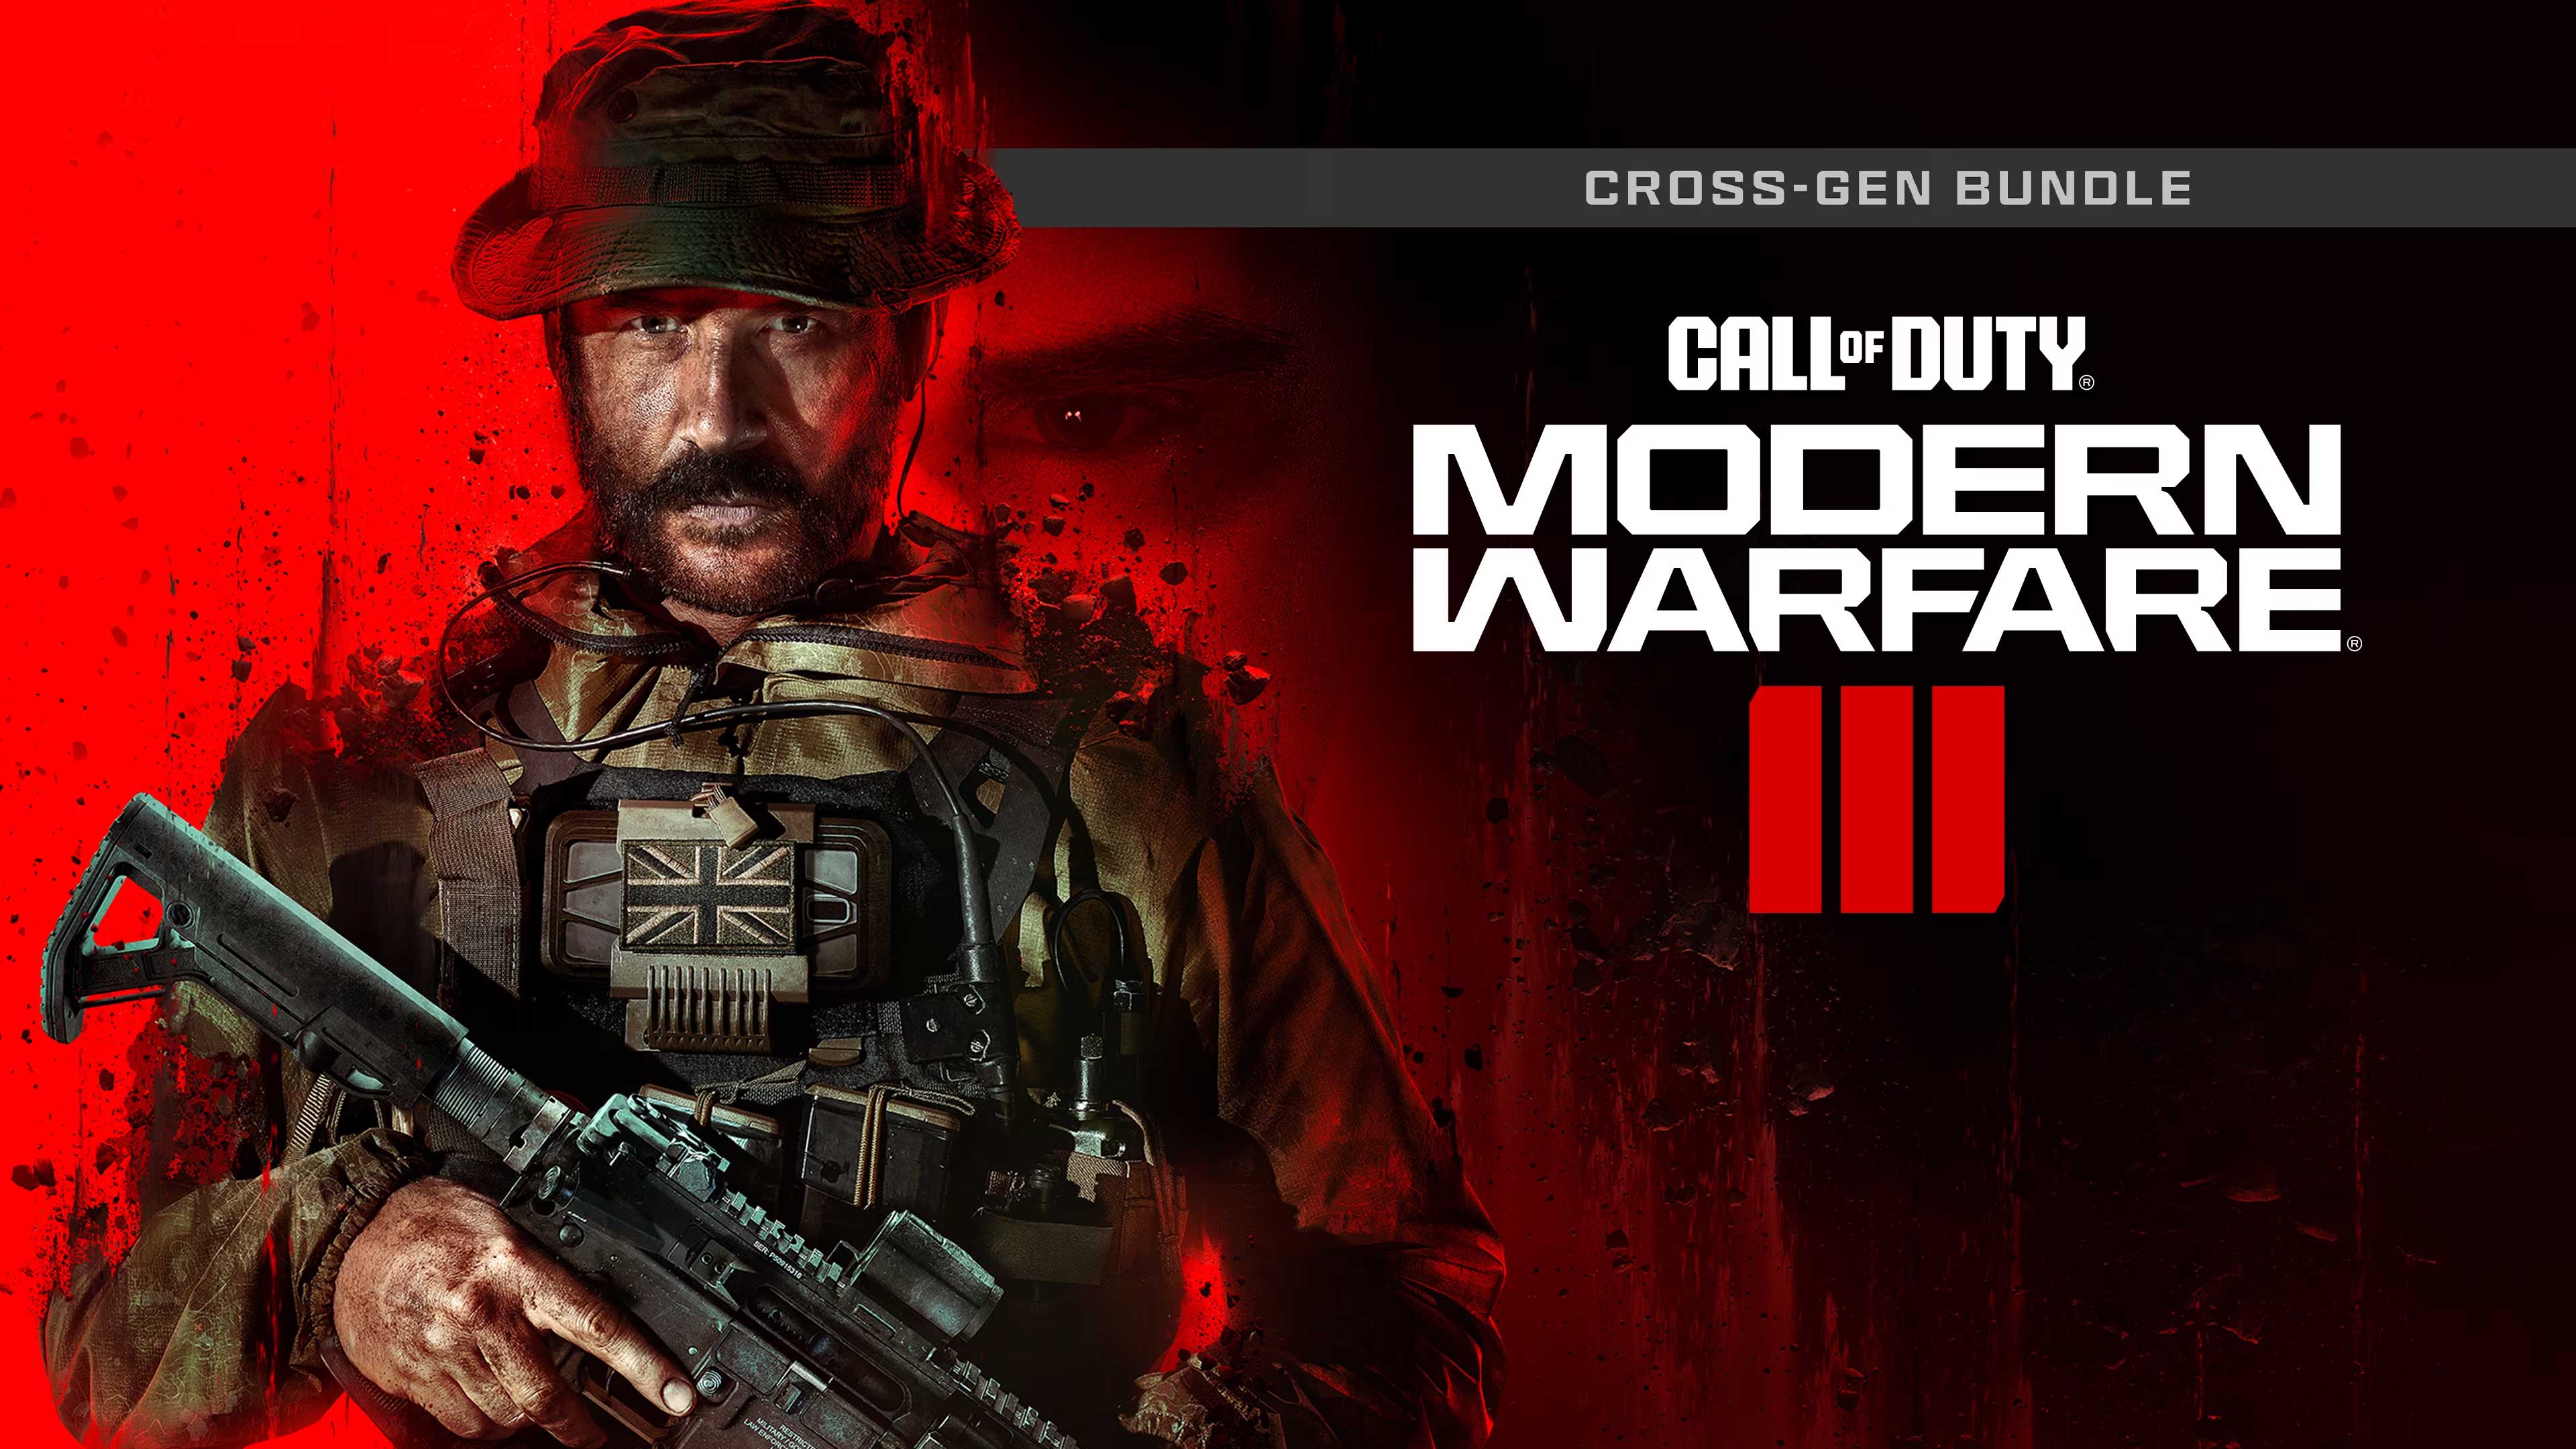 Call of Duty: Modern Warfare III - Cross-Gen Bundle, The Infamous Gamer, theinfamousgamer.com